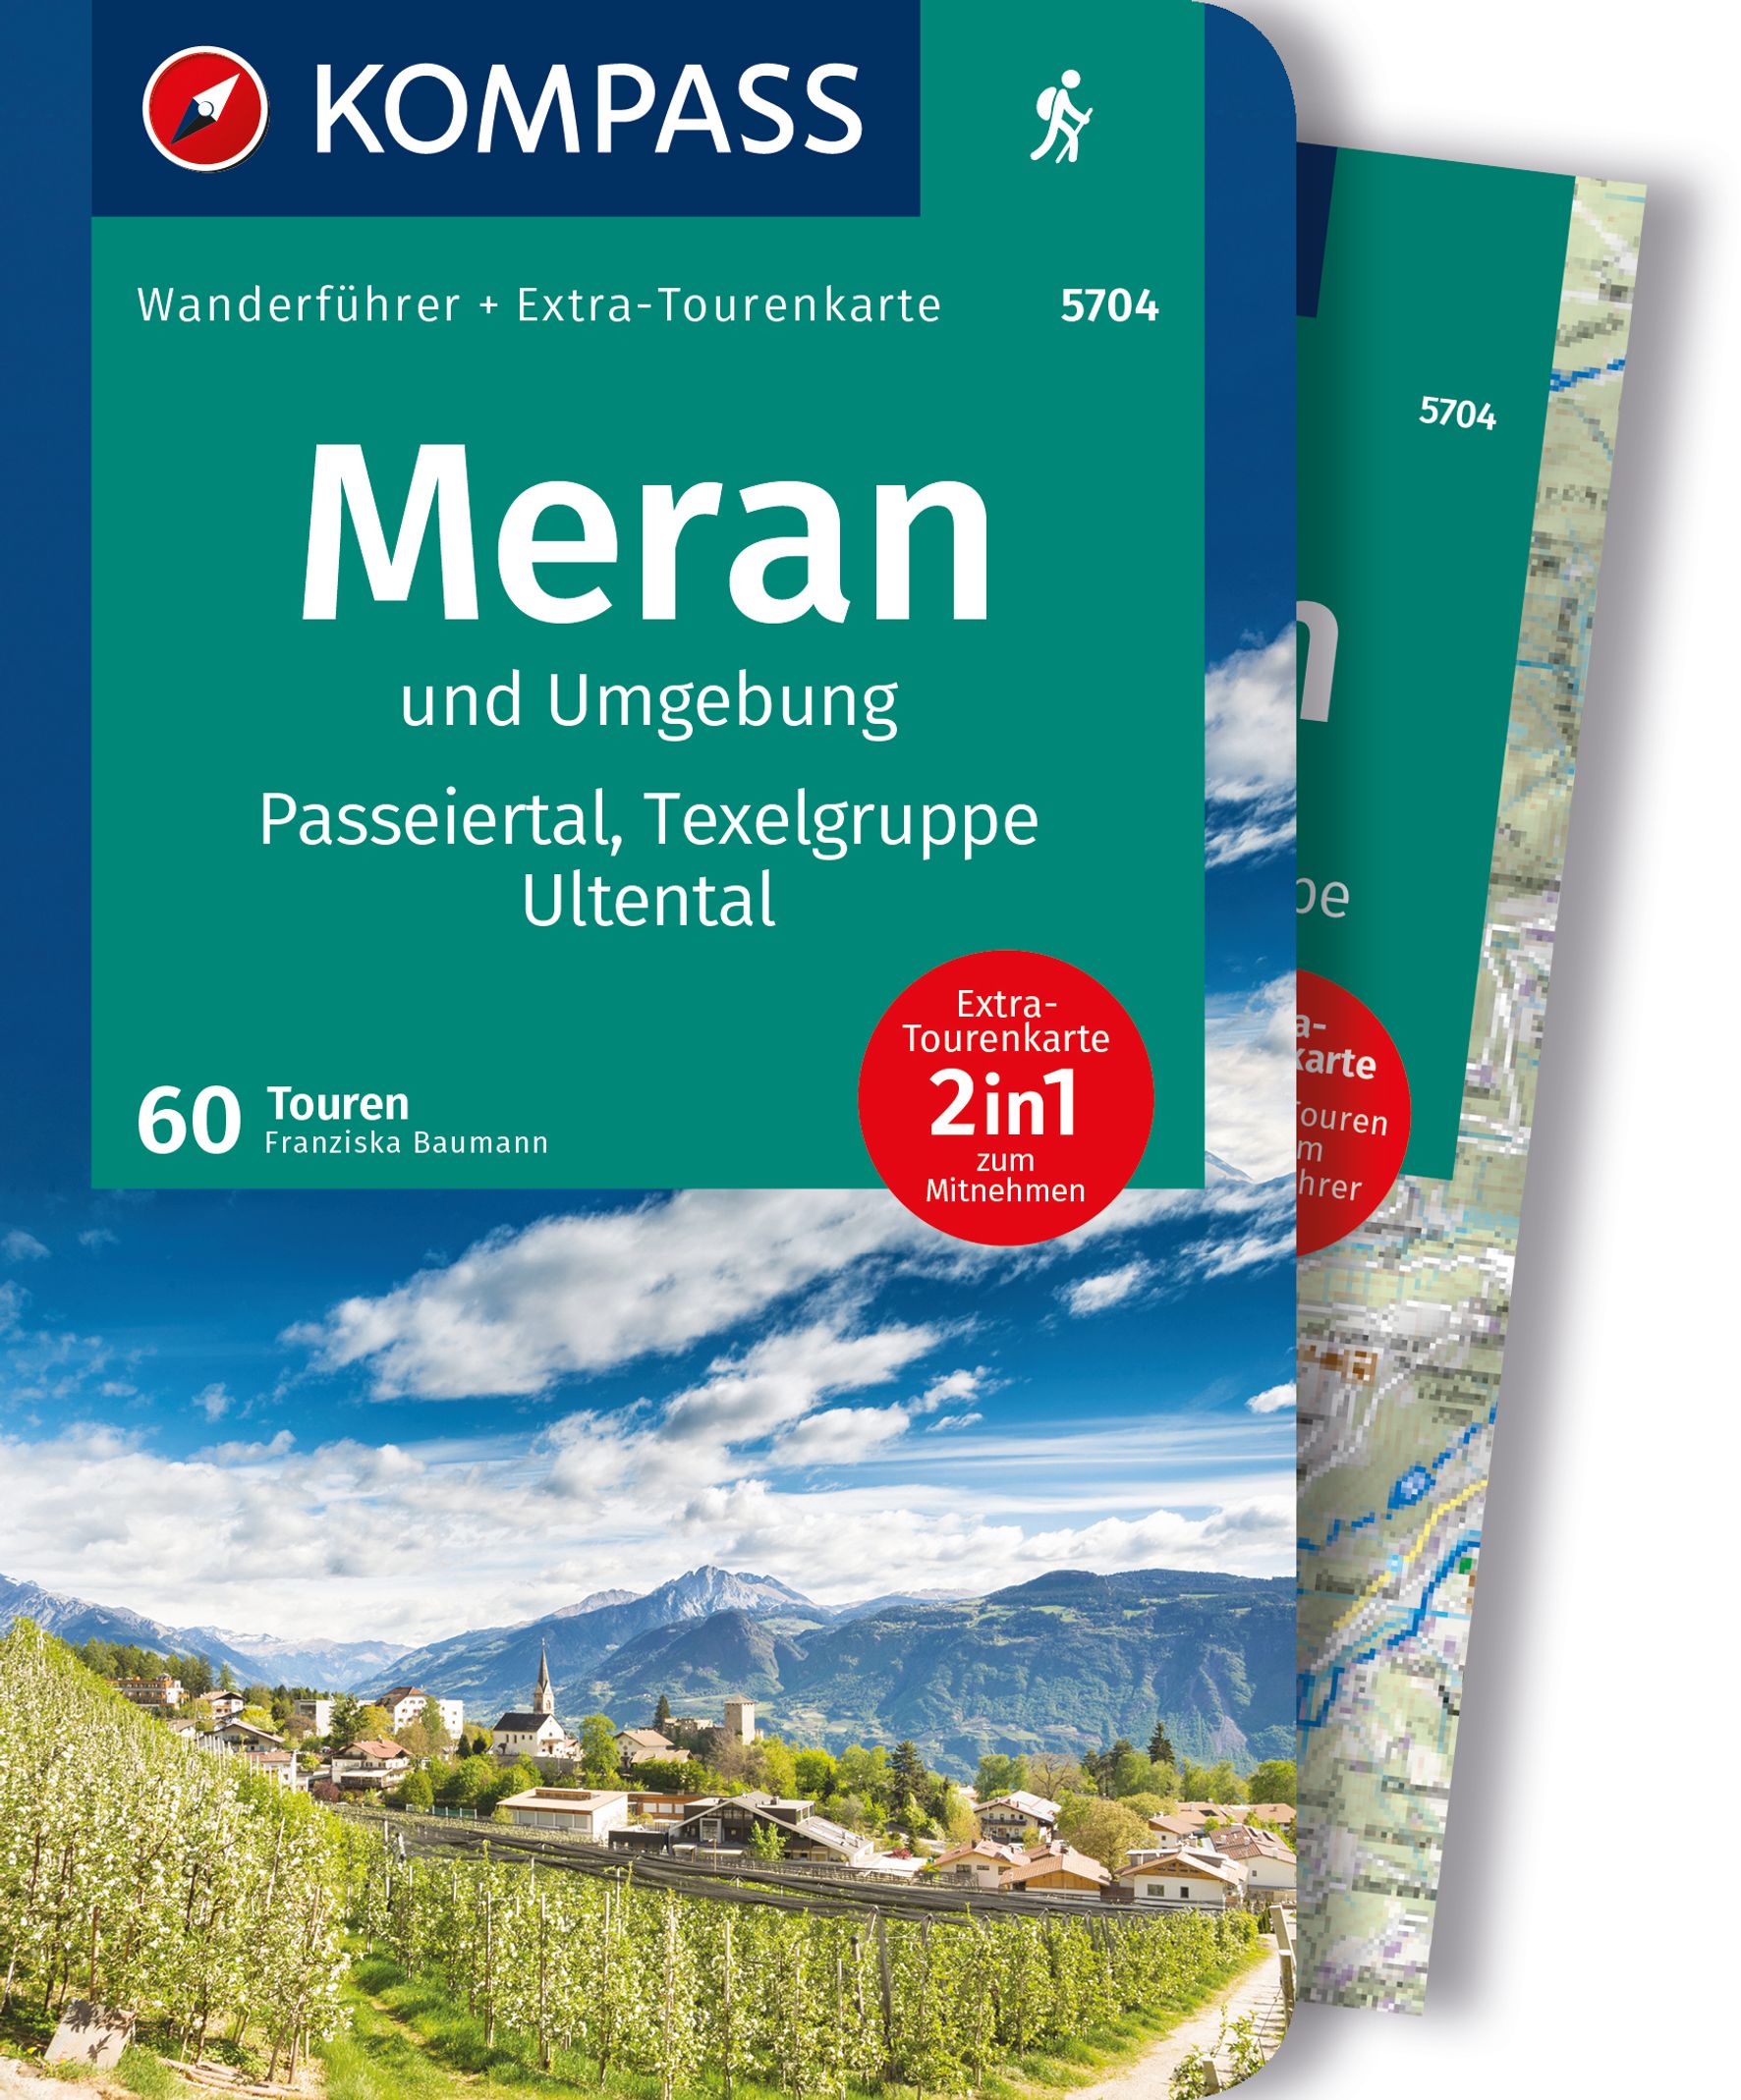 MAIRDUMONT Meran und Umgebung, Passeiertal, Texelgruppe, Ultental, 60 Touren mit Extra-Tourenkarte